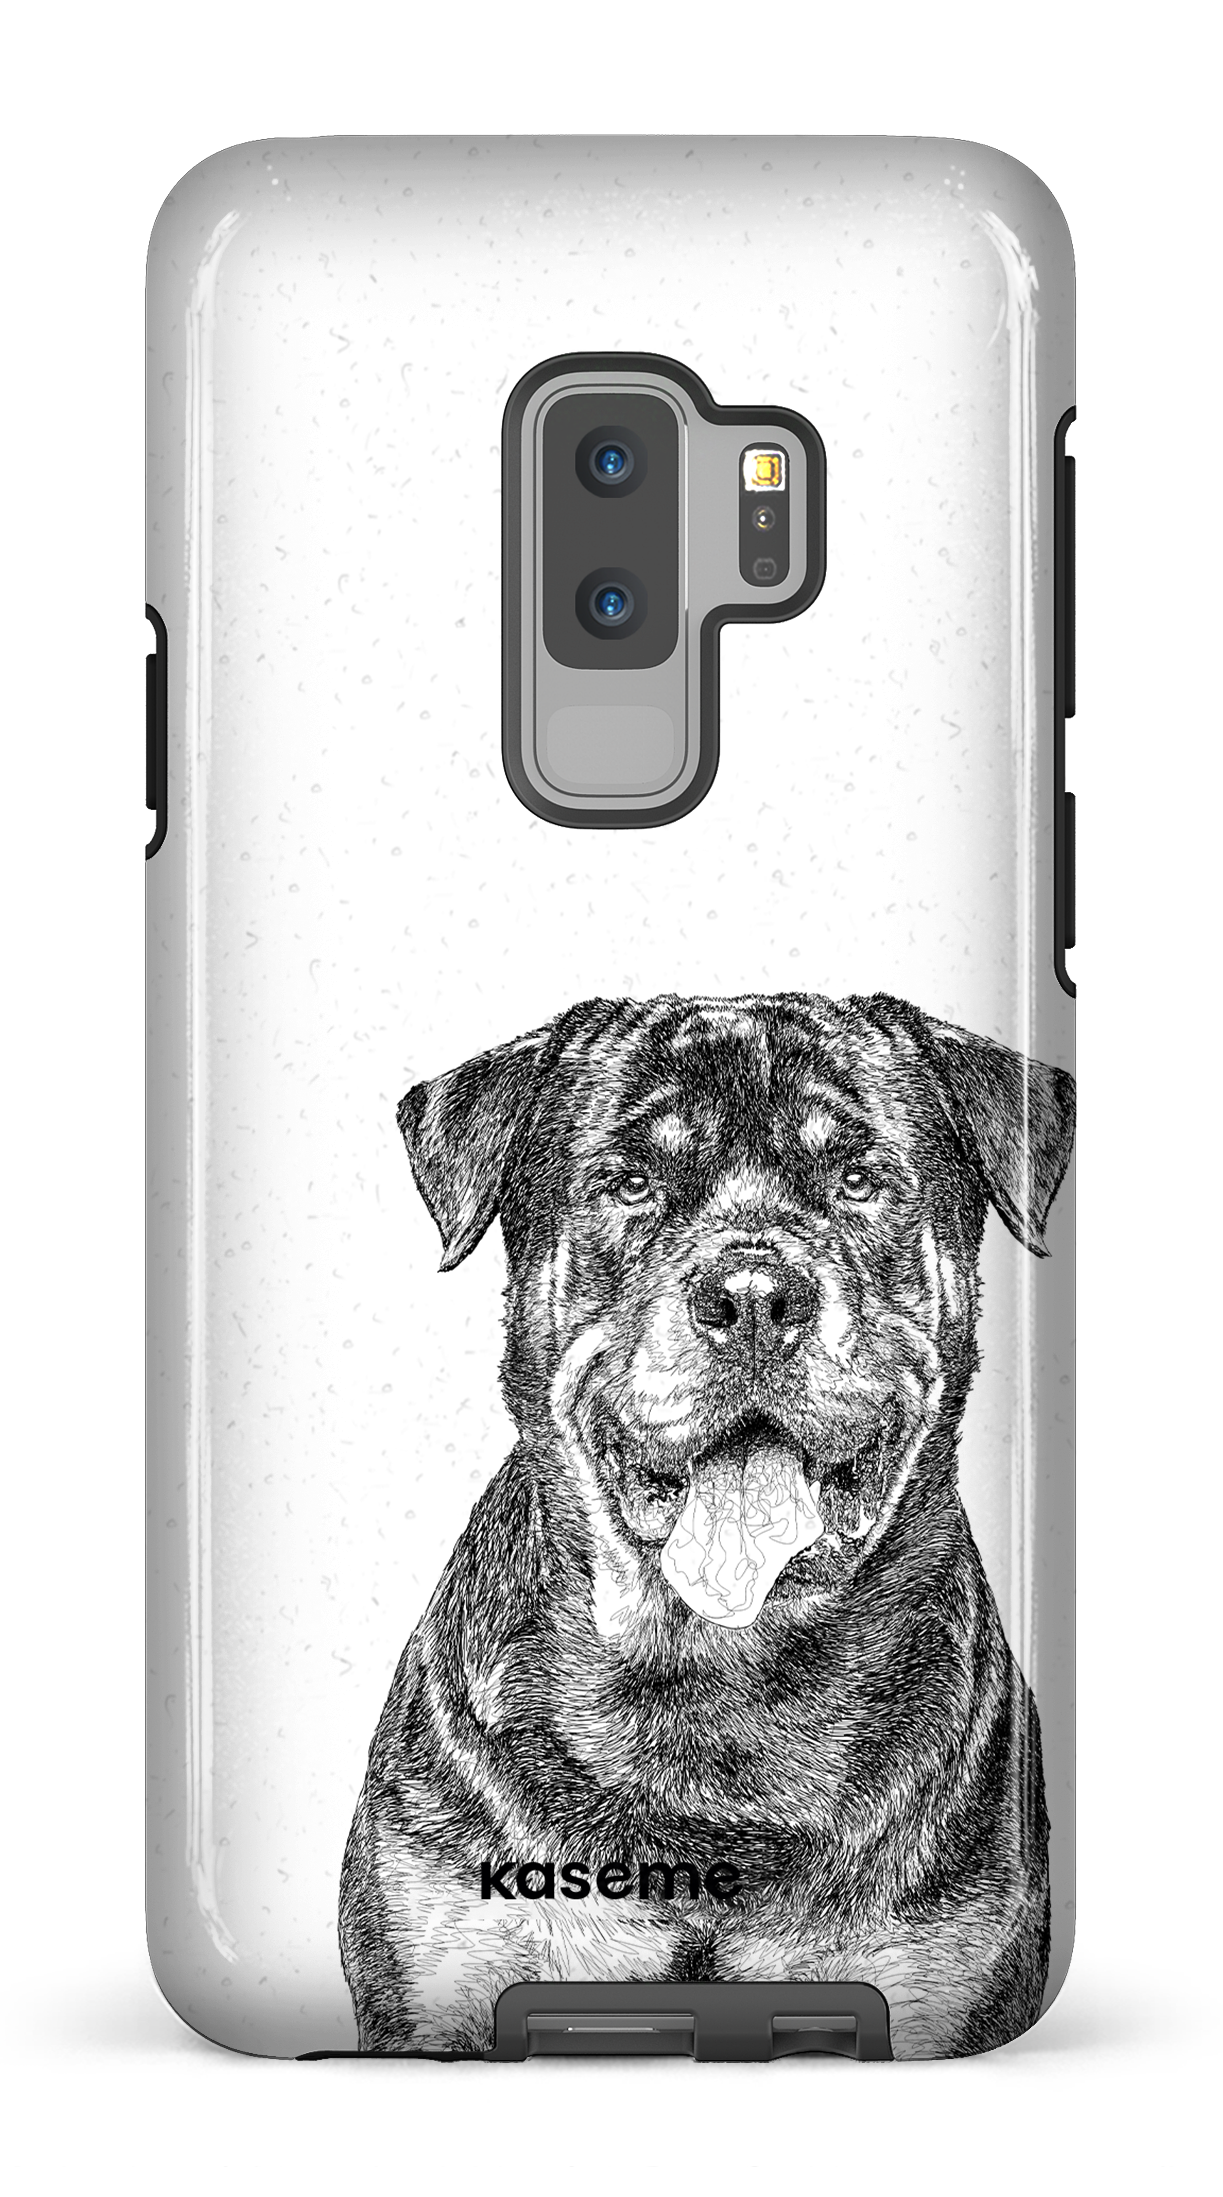 Rottweiler - Galaxy S9 Plus